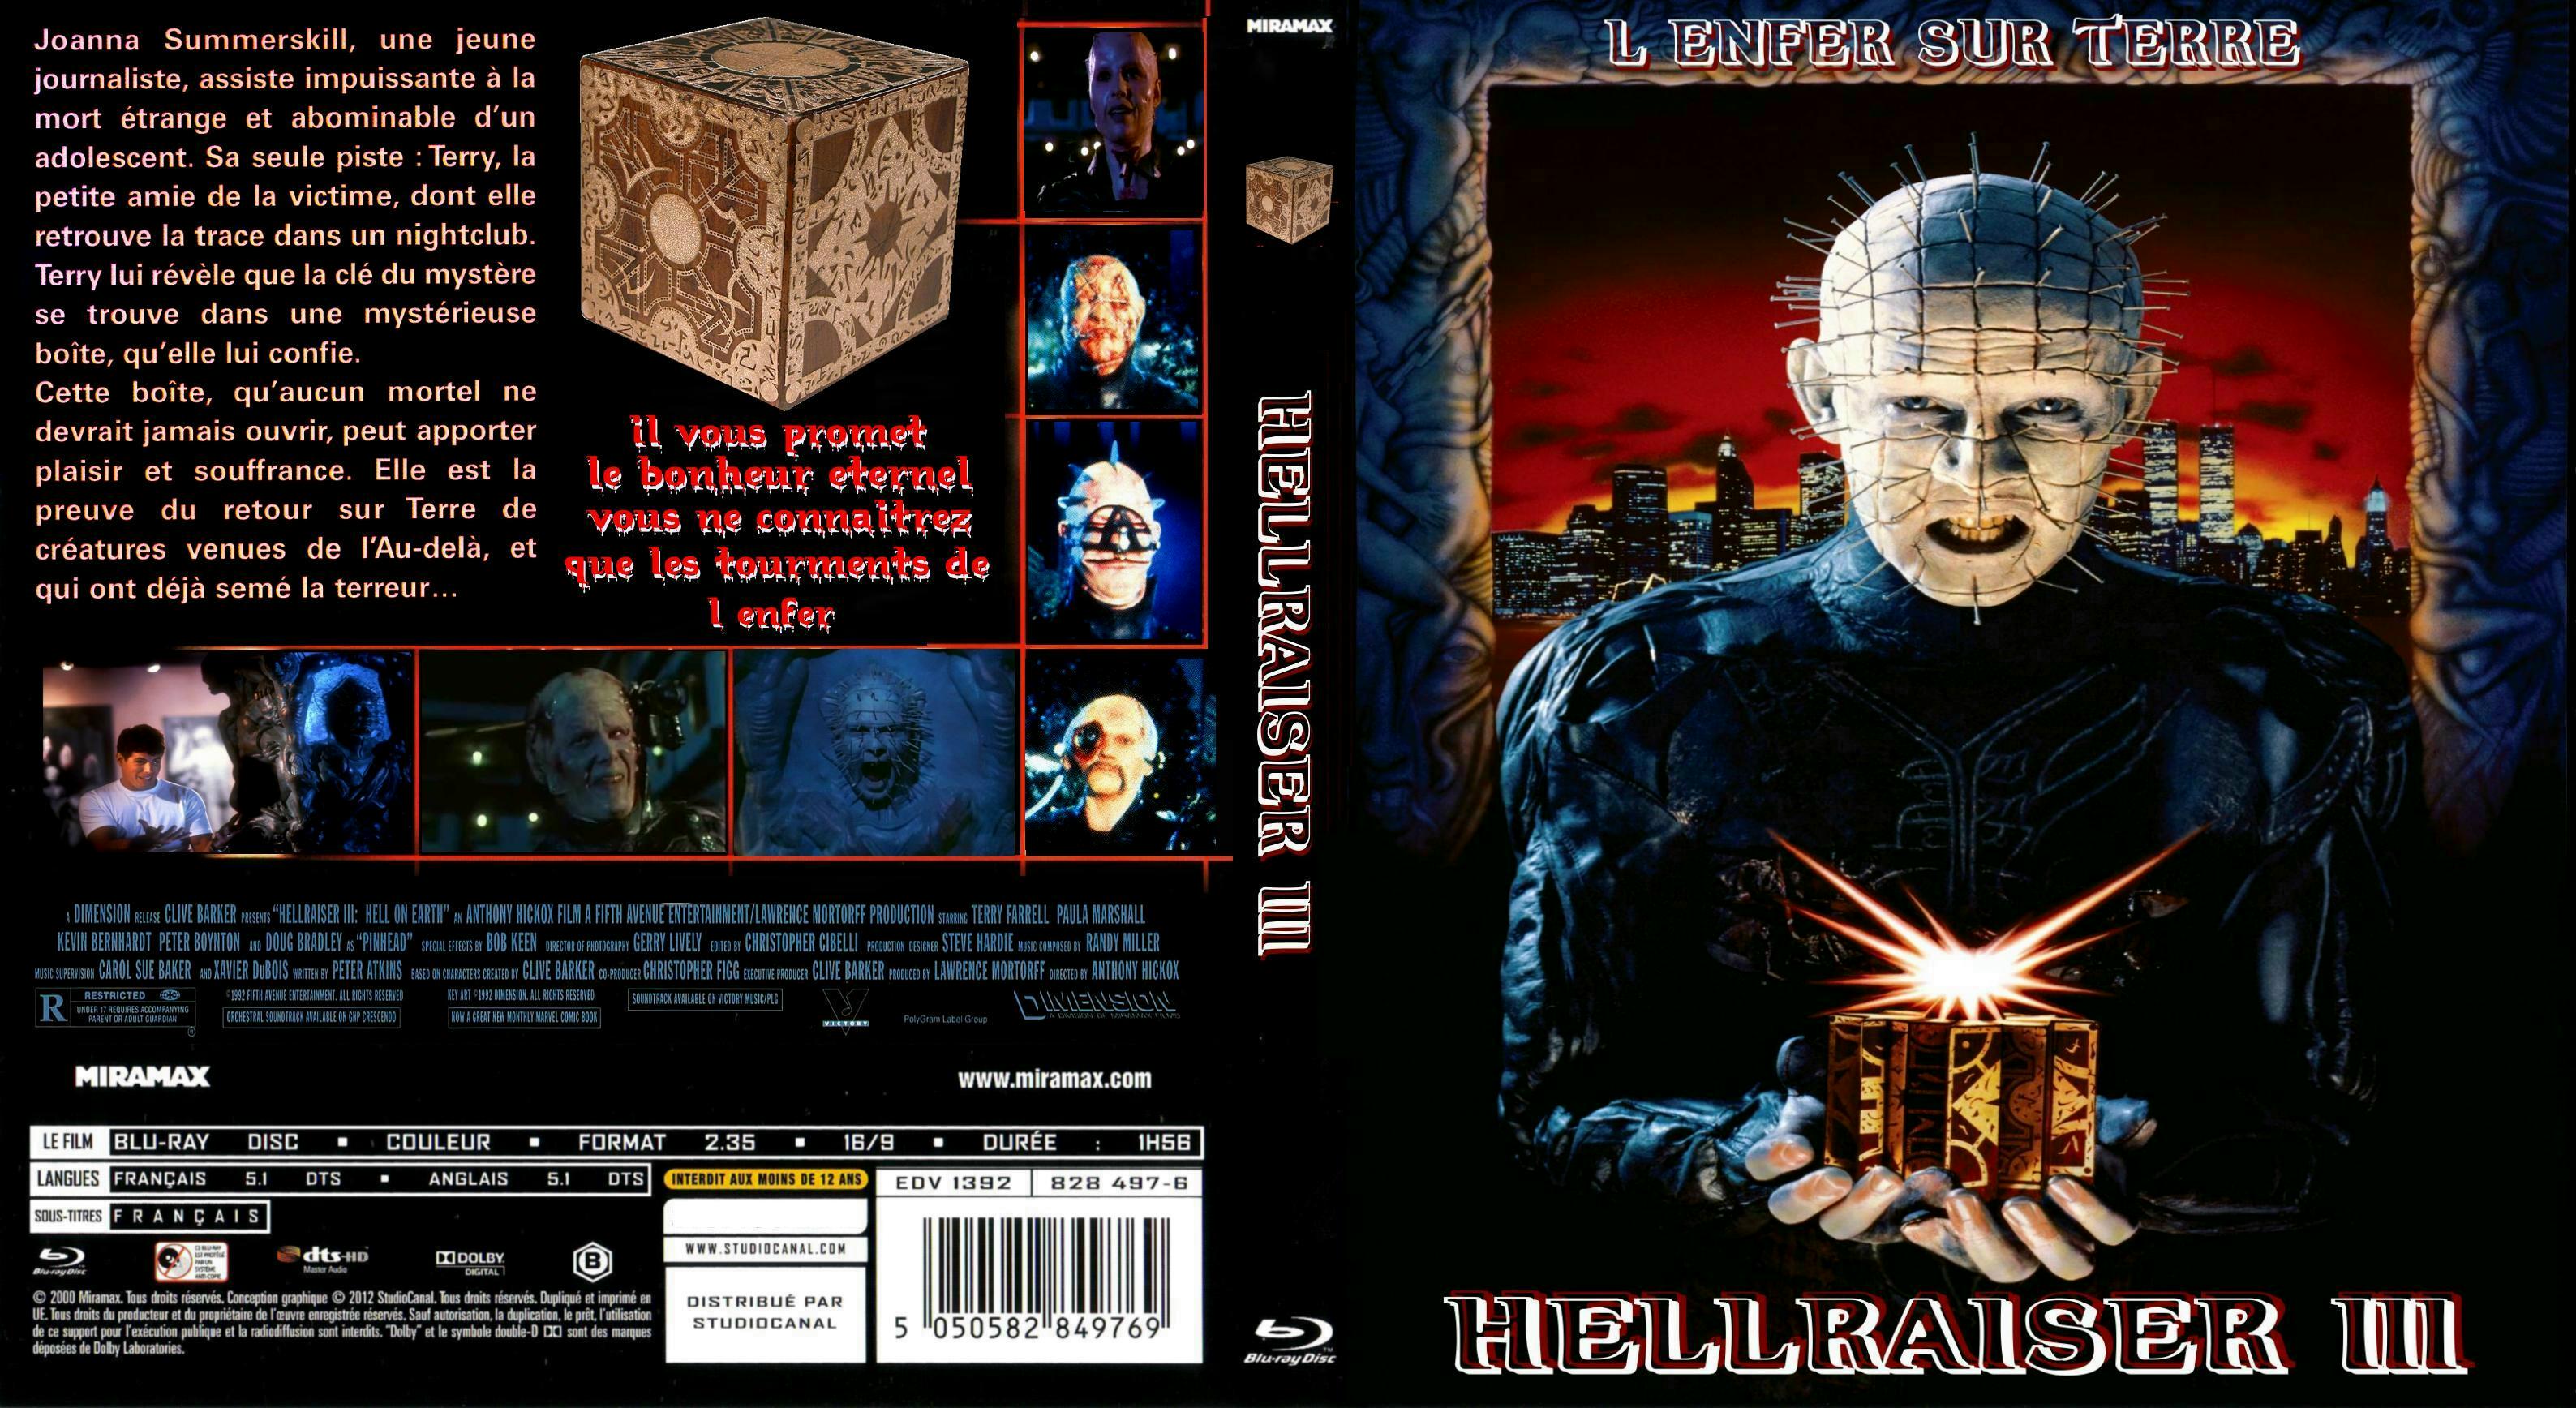 Jaquette DVD Hellraiser 3 custom (BLU-RAY)